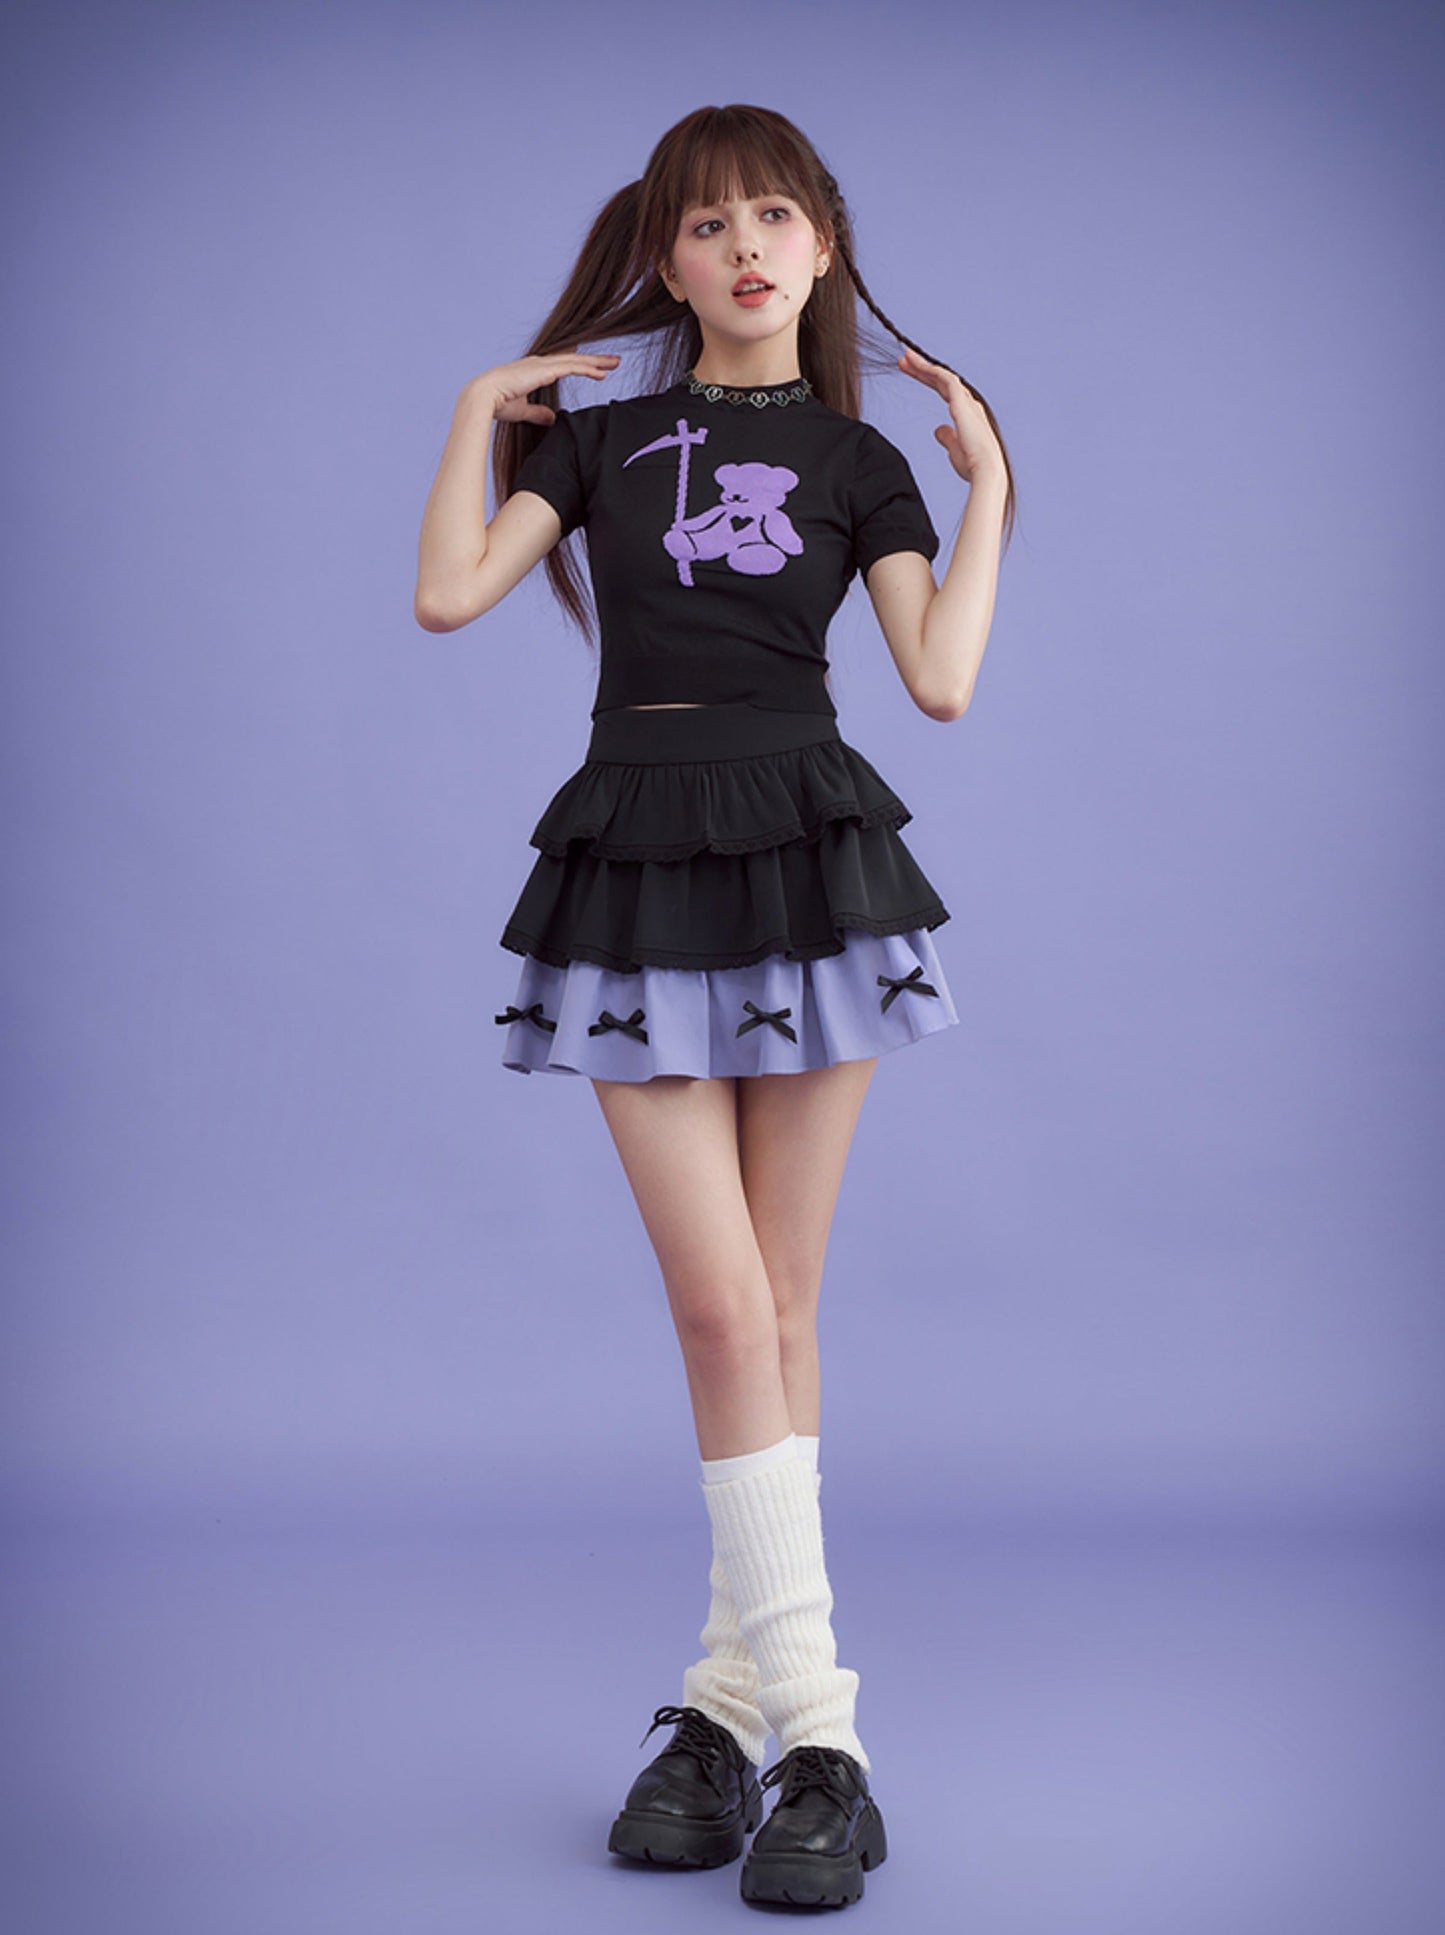 SagiDolls Teenage Fighting Spirit # Bow Meeting # Black Purple Cool Lomi Bad Sweet Doll Feel Cake Skirt Shows Height